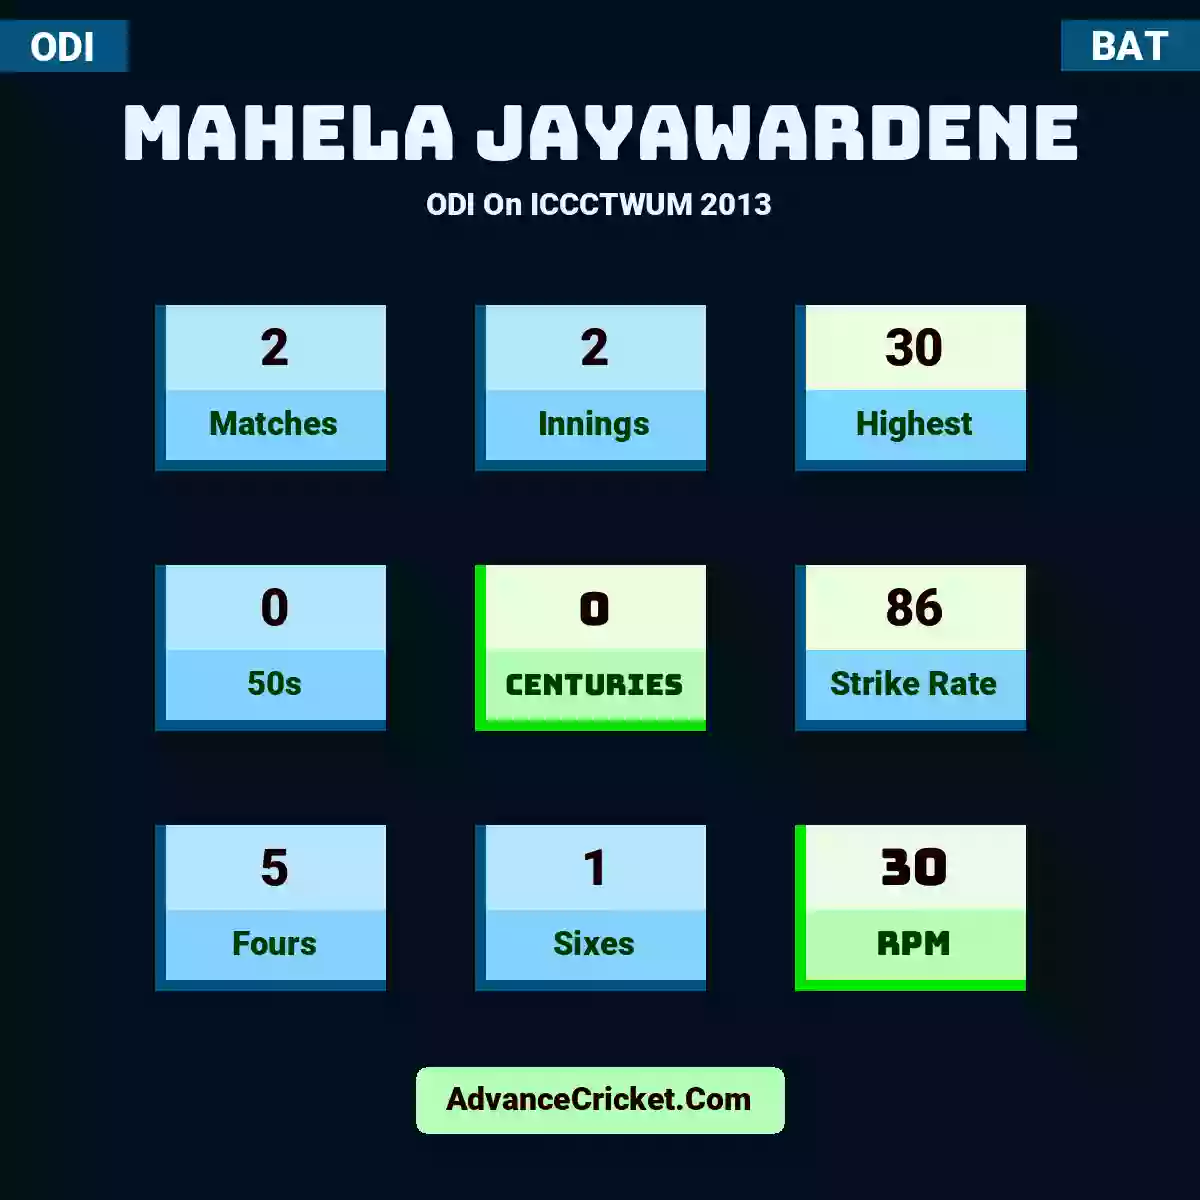 Mahela Jayawardene ODI  On ICCCTWUM 2013, Mahela Jayawardene played 2 matches, scored 30 runs as highest, 0 half-centuries, and 0 centuries, with a strike rate of 86. M.Jayawardene hit 5 fours and 1 sixes, with an RPM of 30.